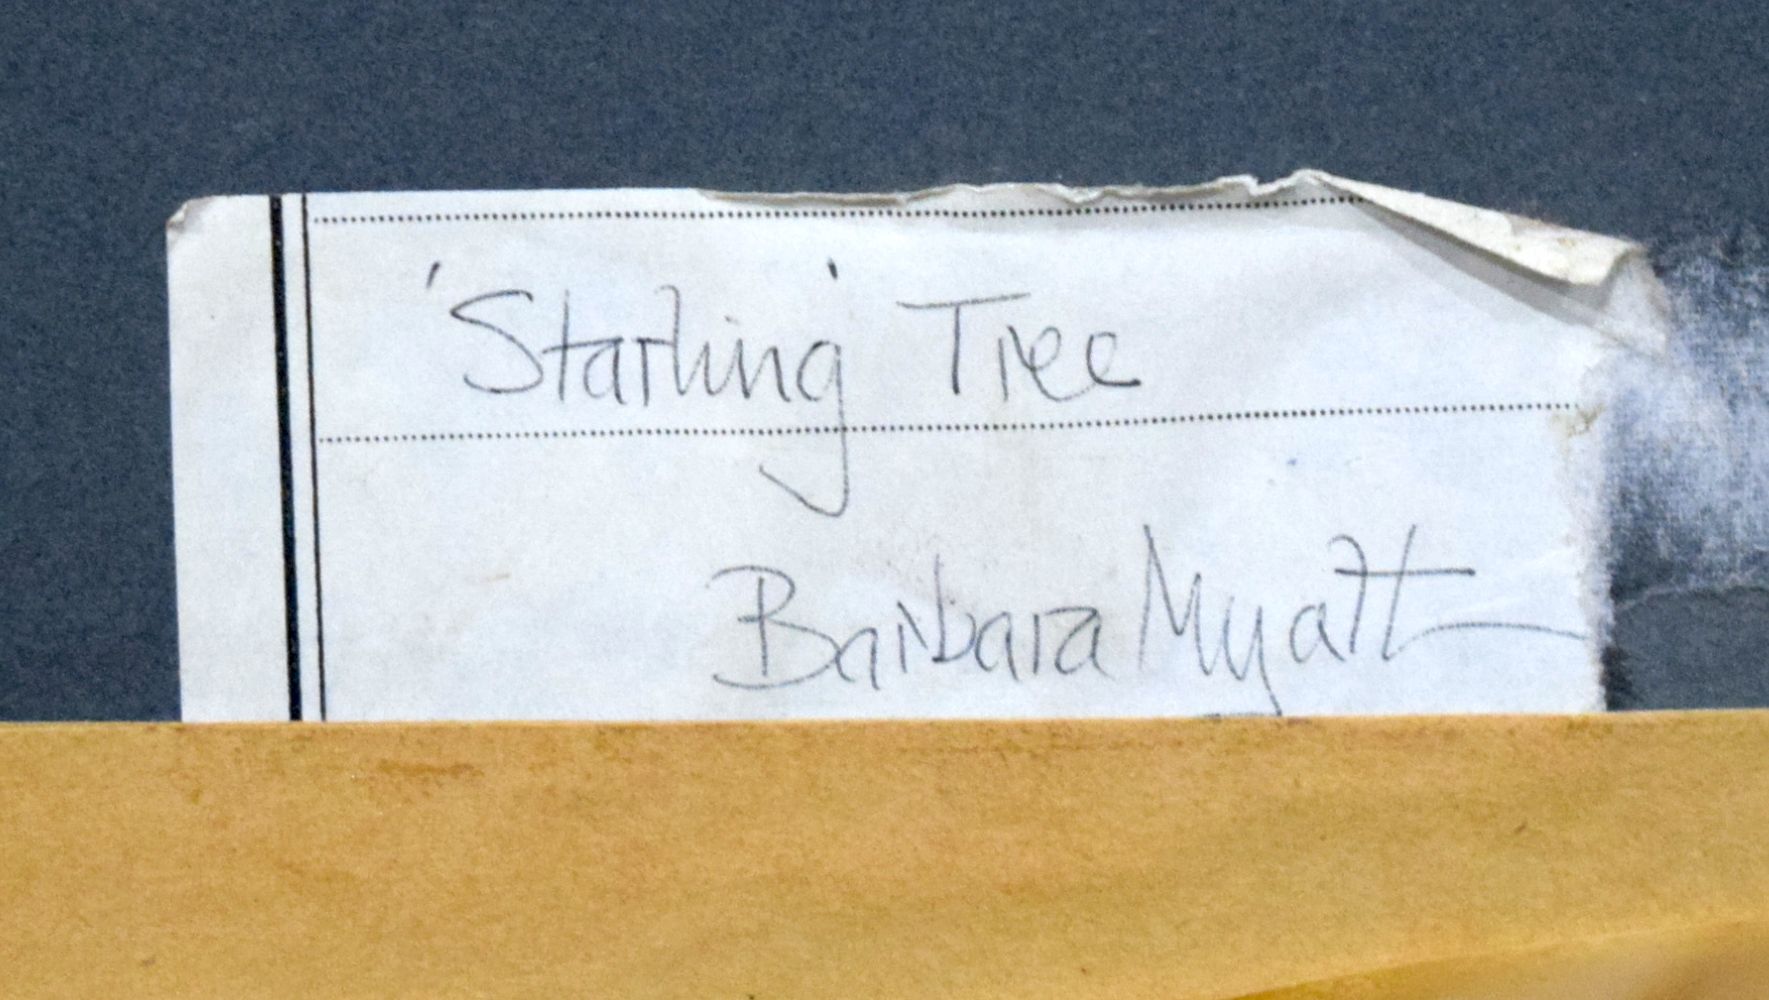 Barbara Myatt (20th Century) Watercolour, Starting Tree. Image 39 cm x 44 cm. - Image 4 of 4